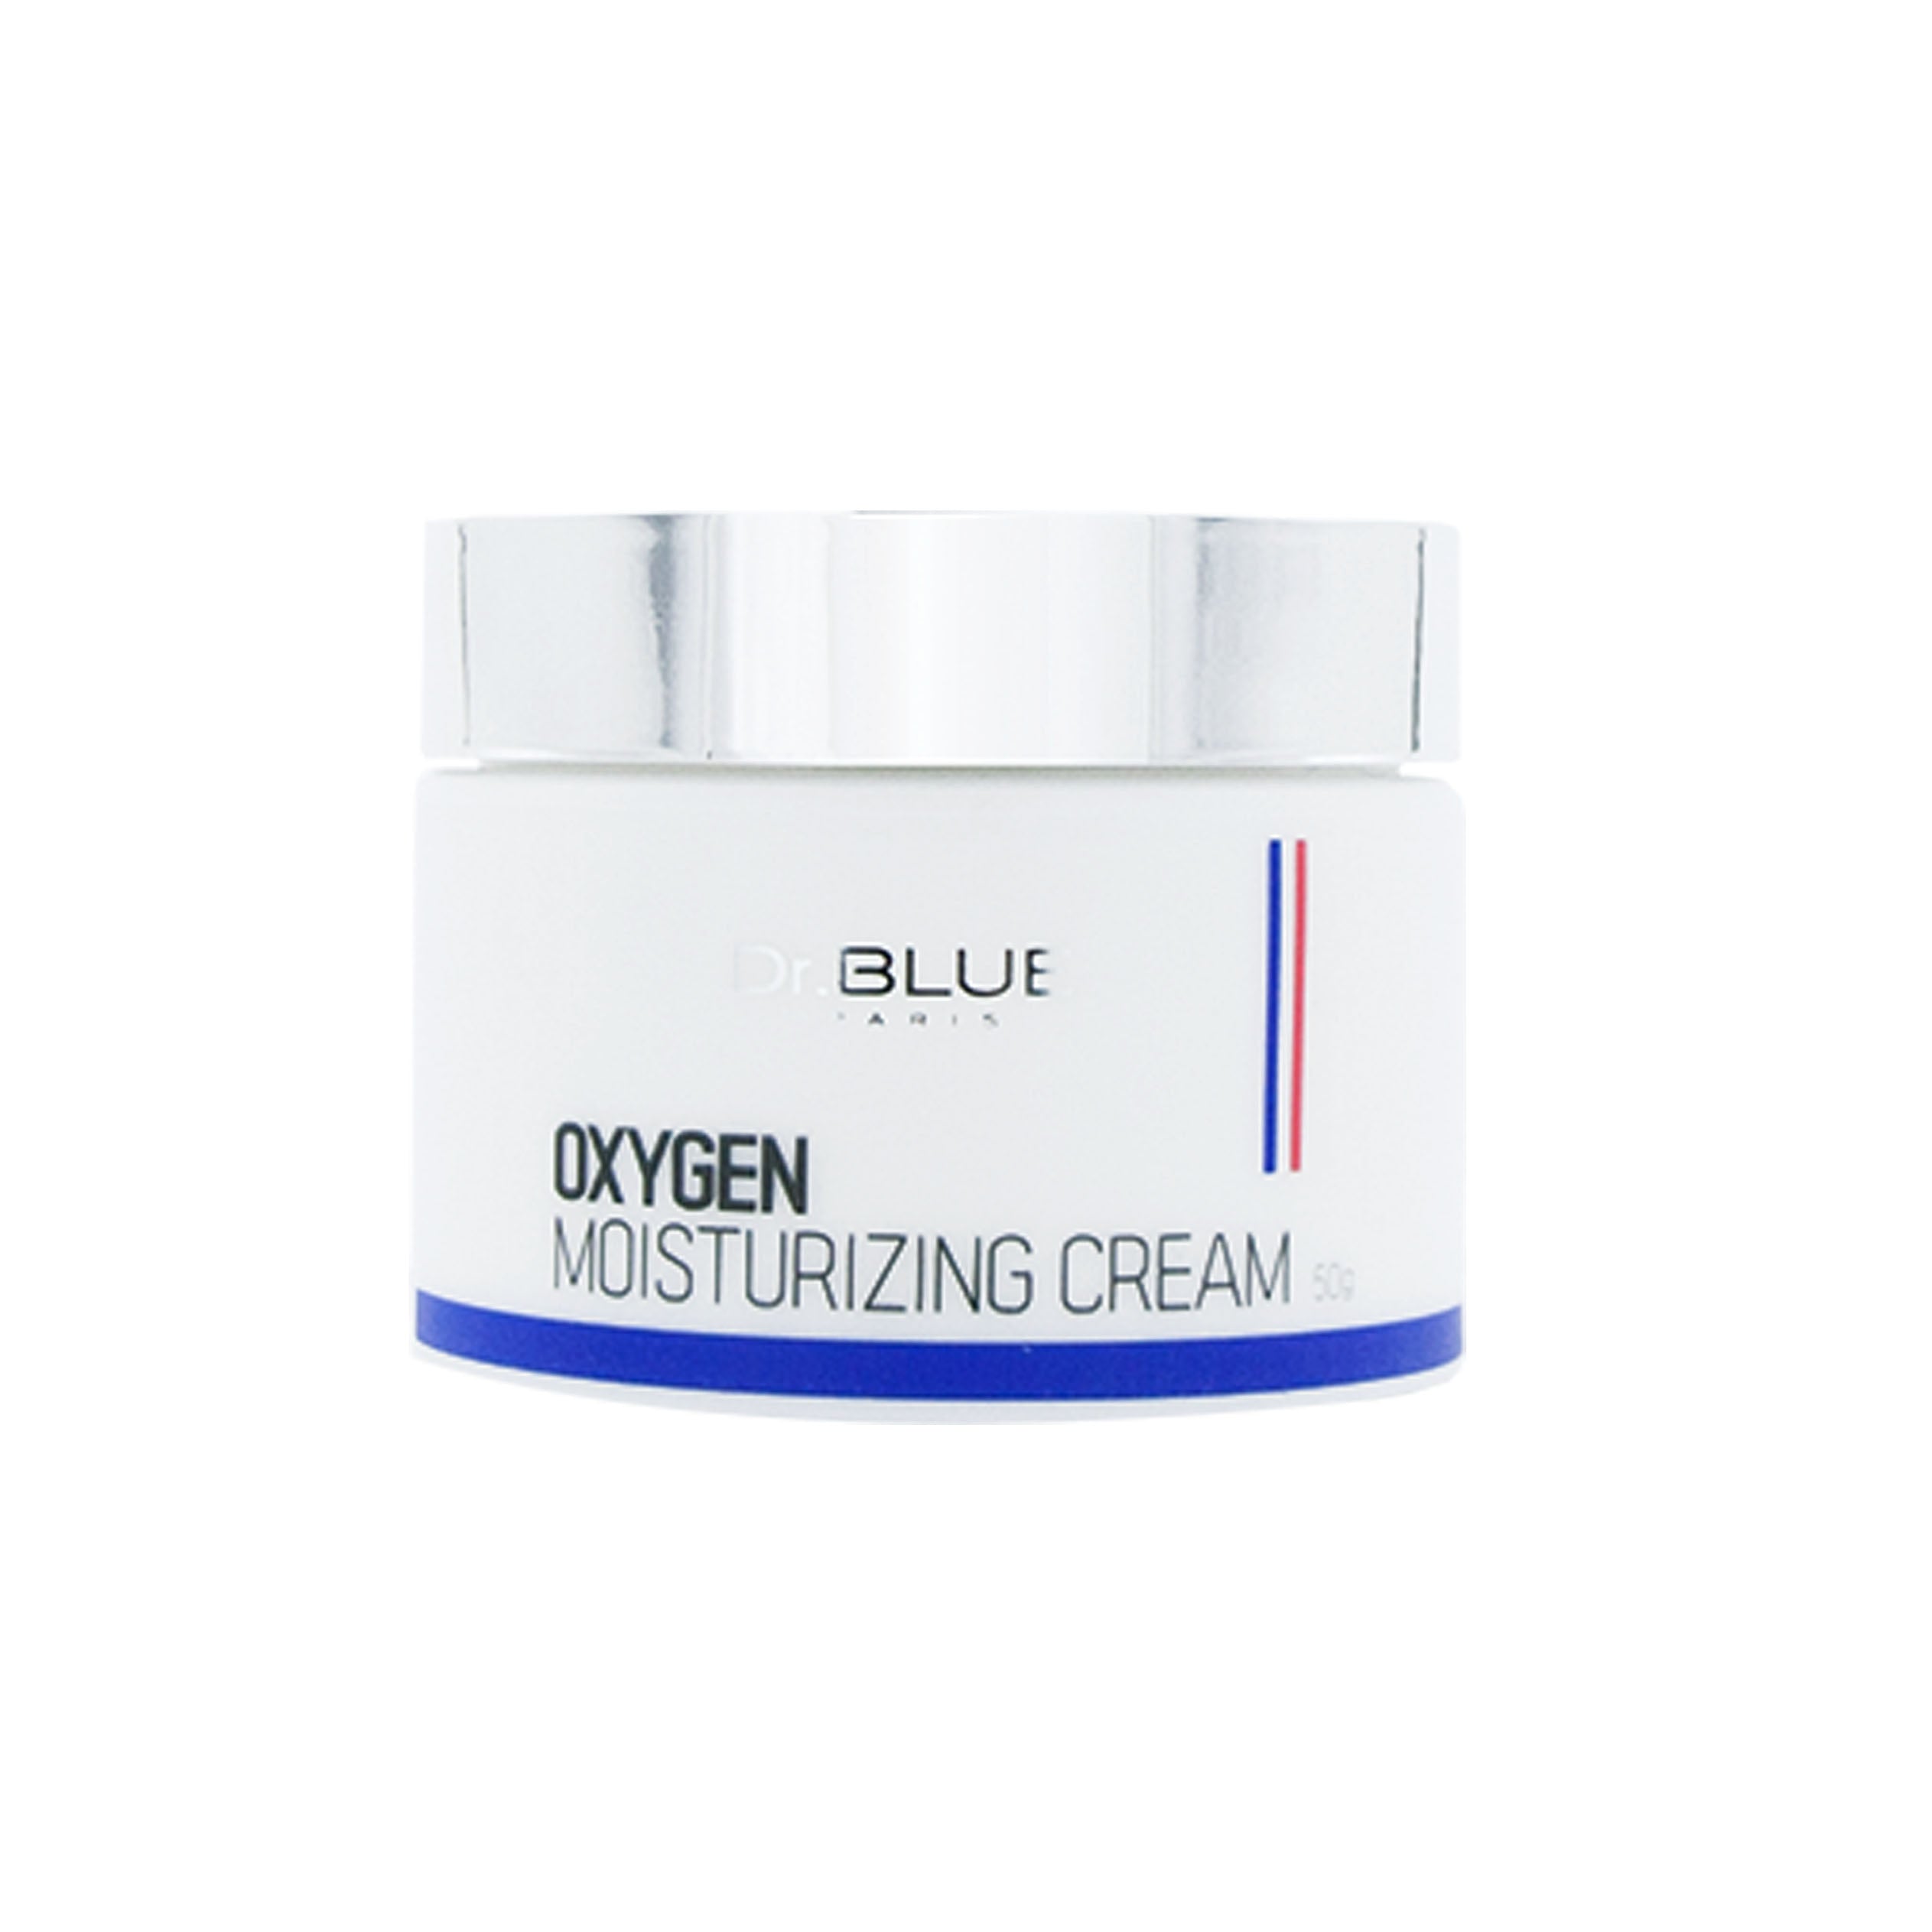 Oxygen Moisturizing Cream